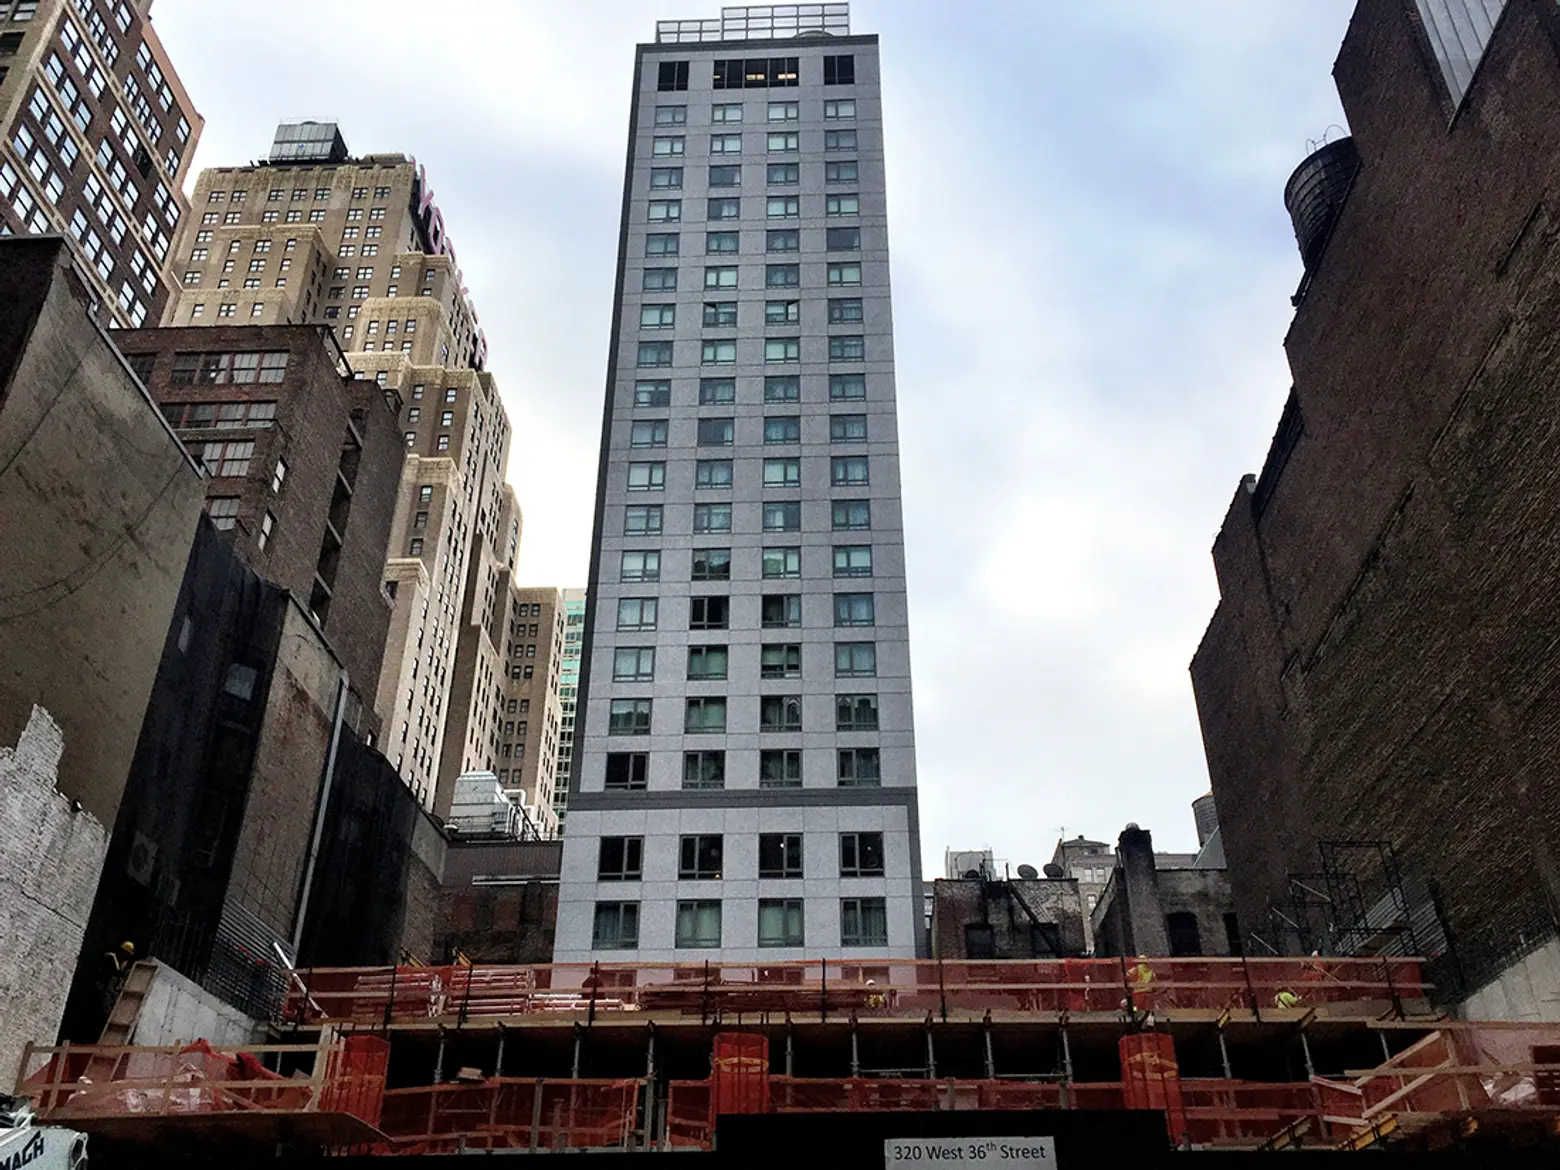 Flintlock Construction, Raber Enterprises, Crowne Plaza, Times Square hotels